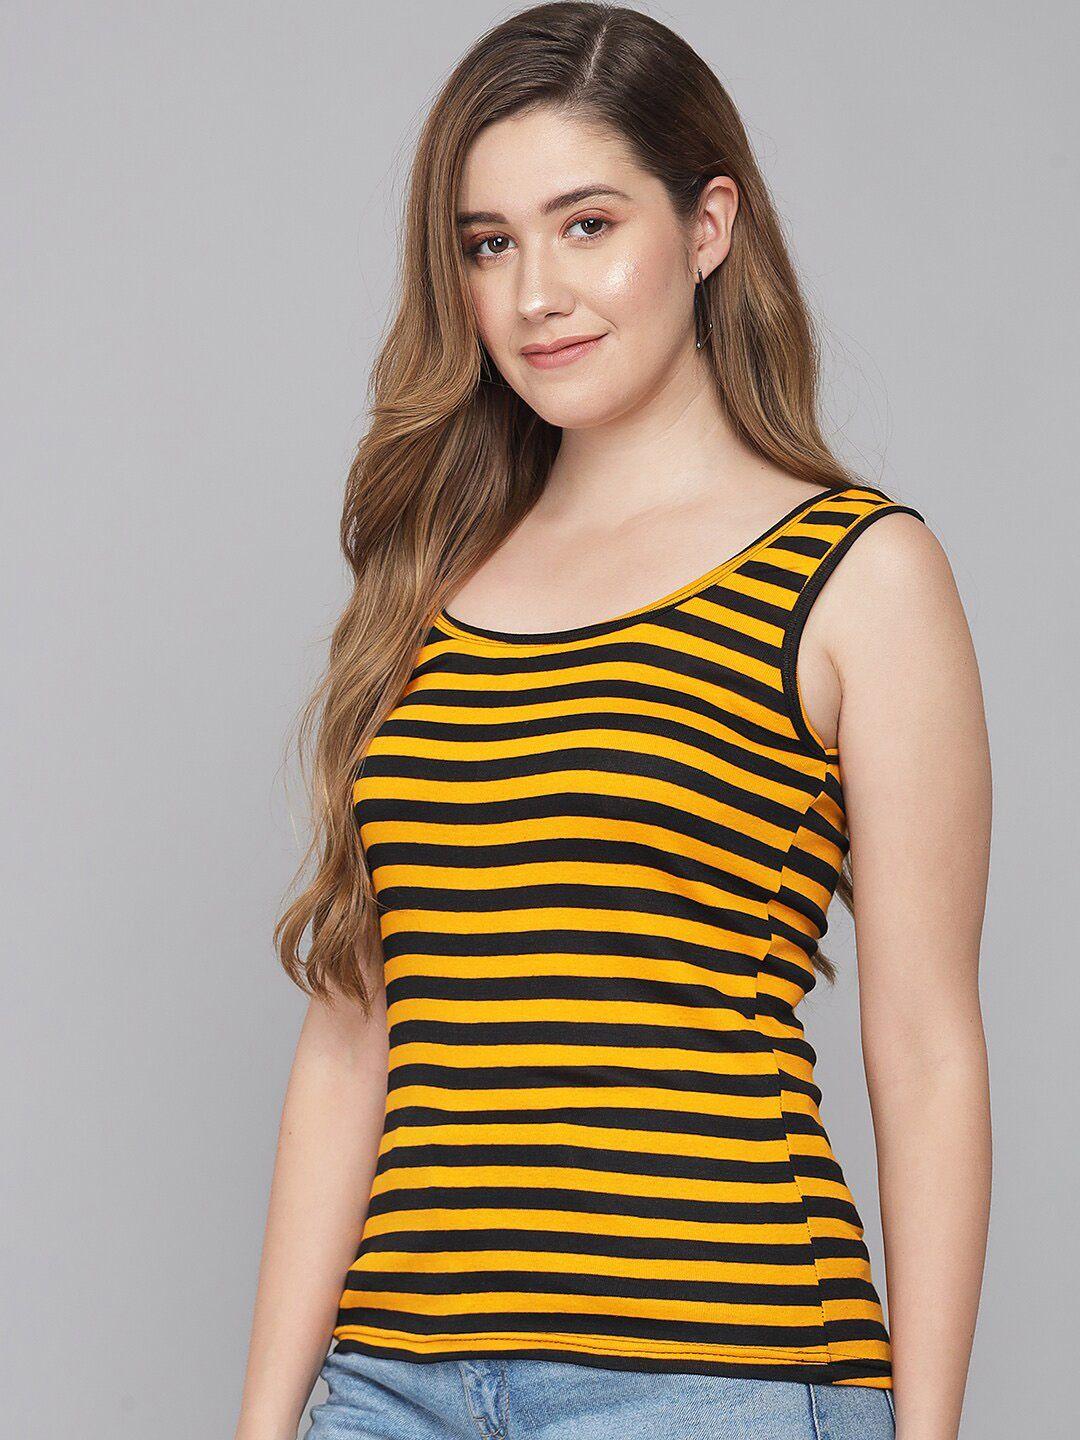 q-rious-women-yellow-&-black-striped-tank-top-camisole